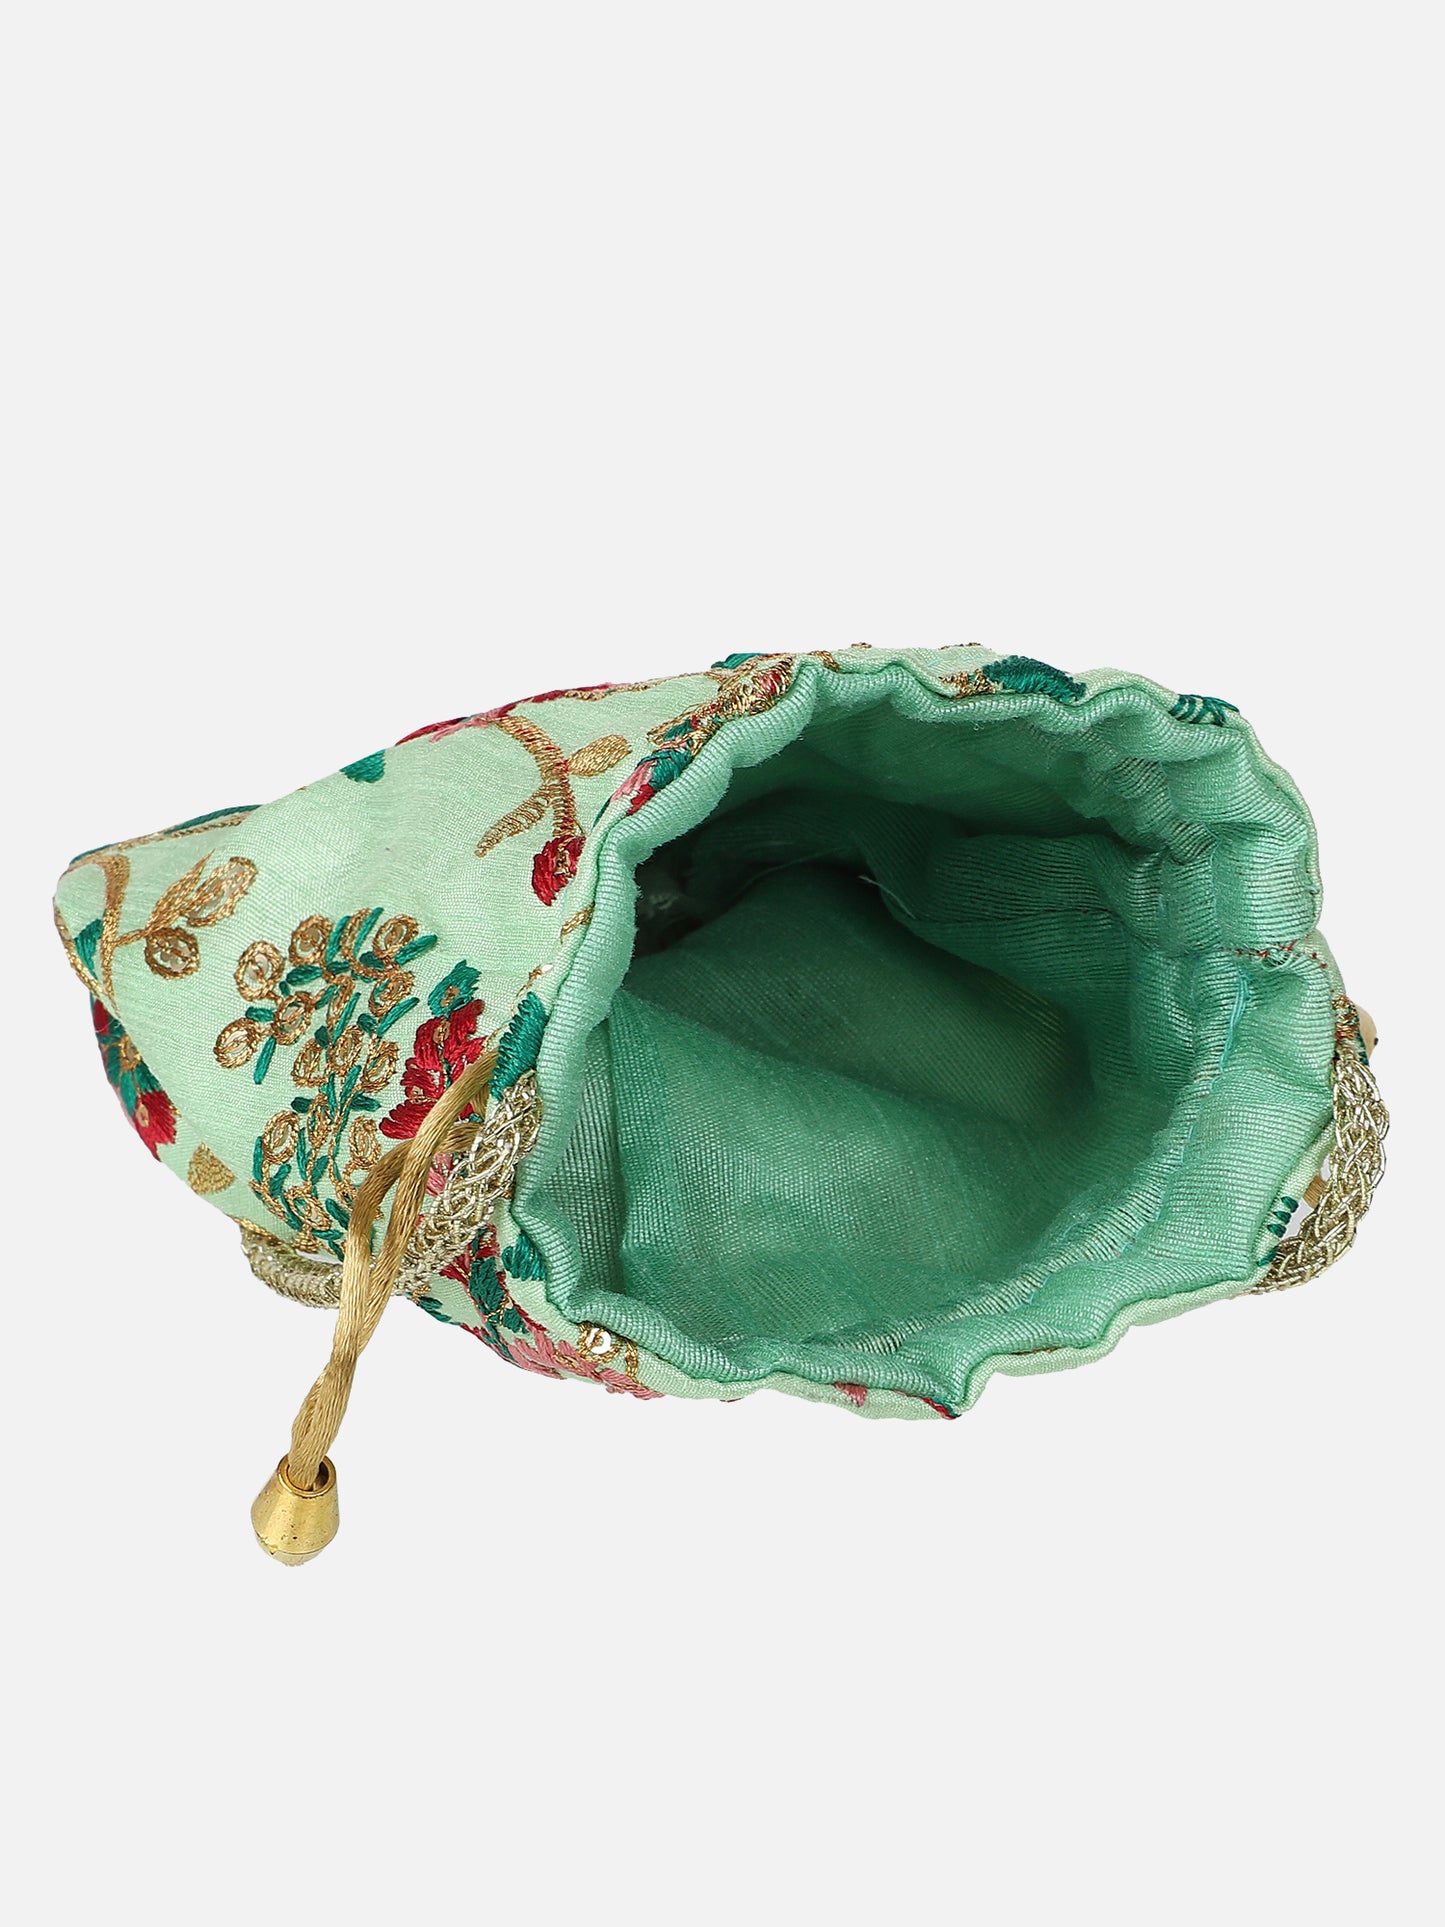 Handcrafted Green Potli Bag Multicolor Embroidery